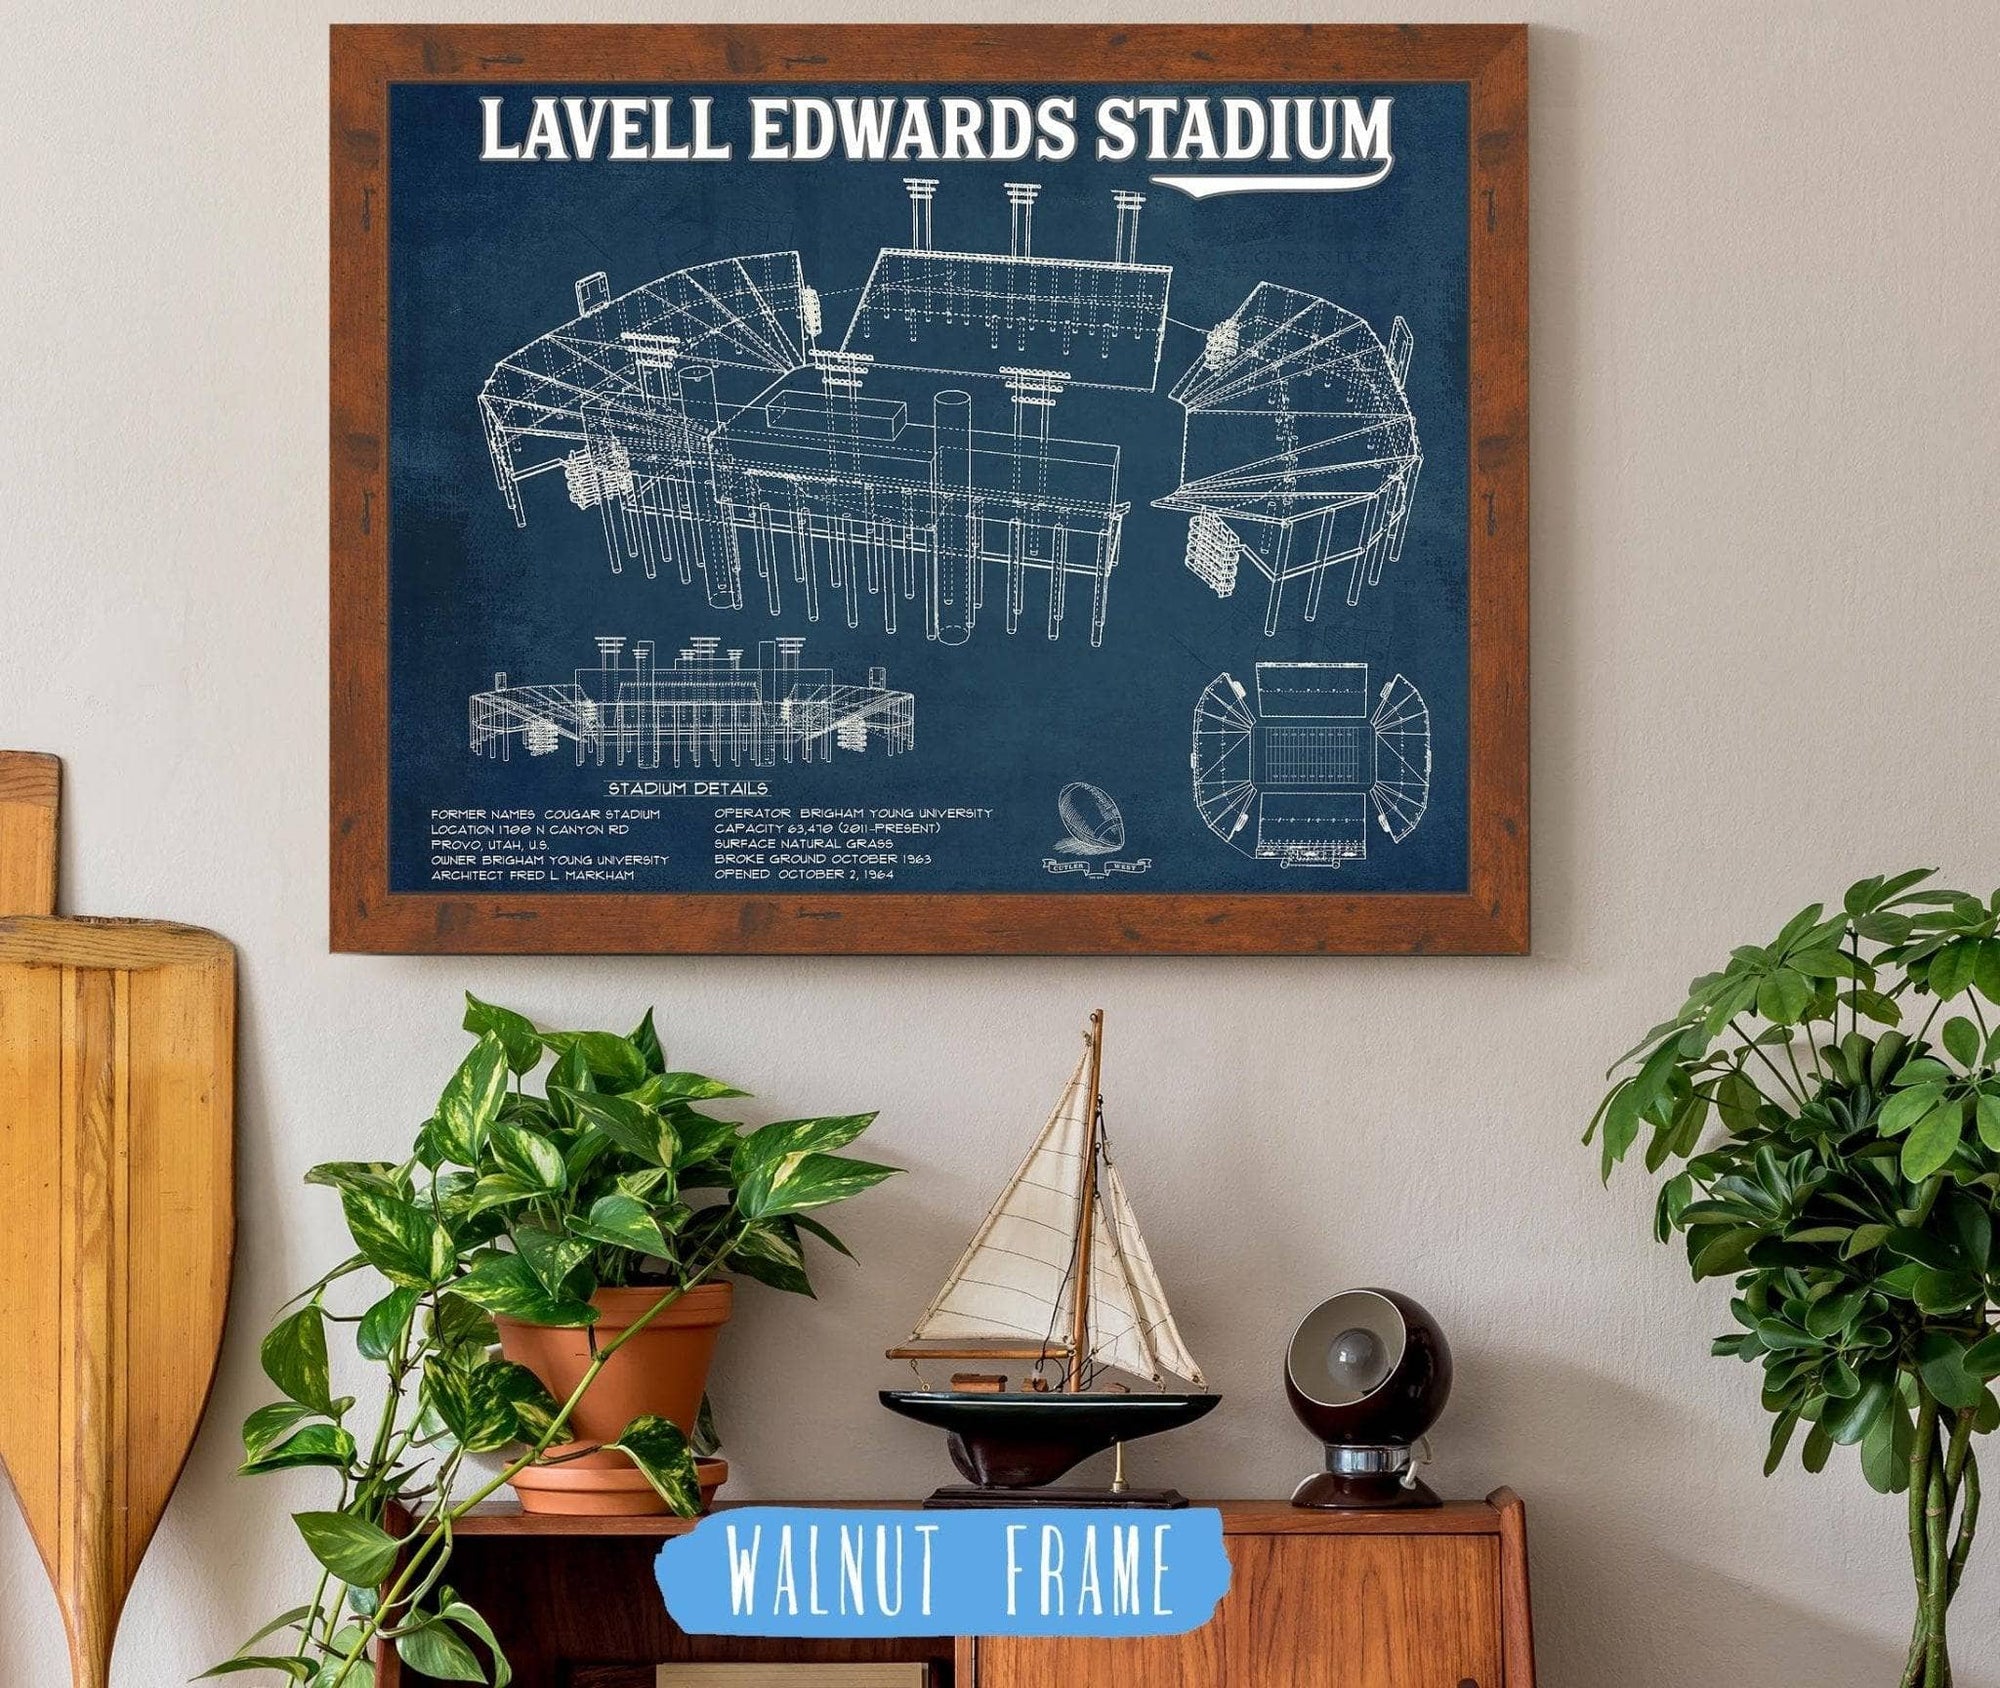 Cutler West College Football Collection 14" x 11" / Walnut Frame BYU Cougars Stadium Art - Lavell Edwards Vintage Stadium & Blueprint Art Print 639921146_45704